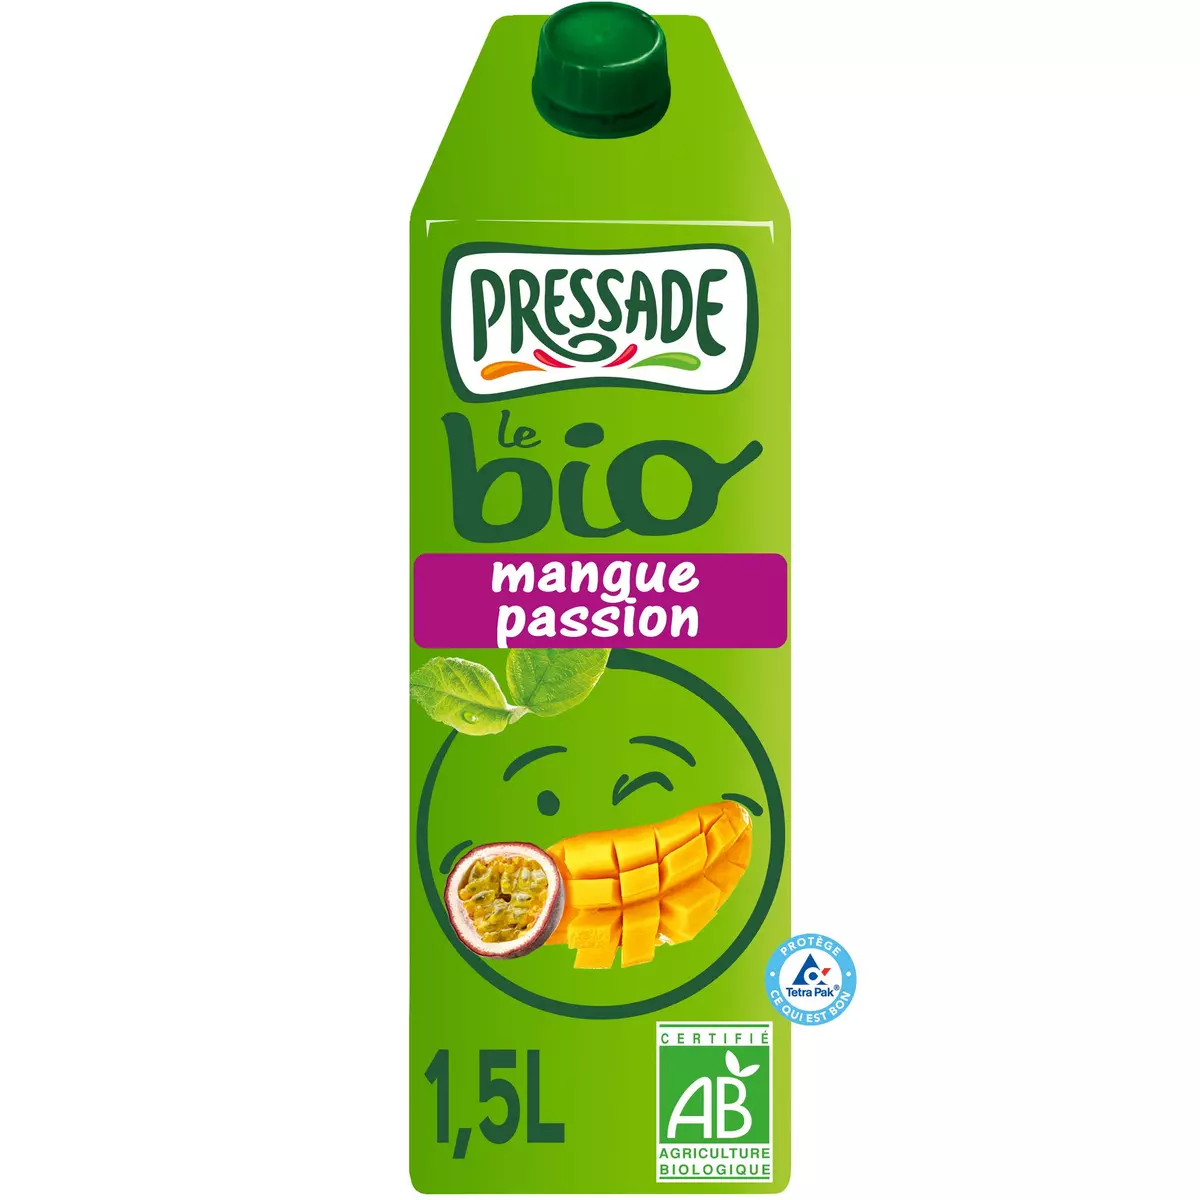 PRESSADE Nectar mangue passion bio brique 1,5l